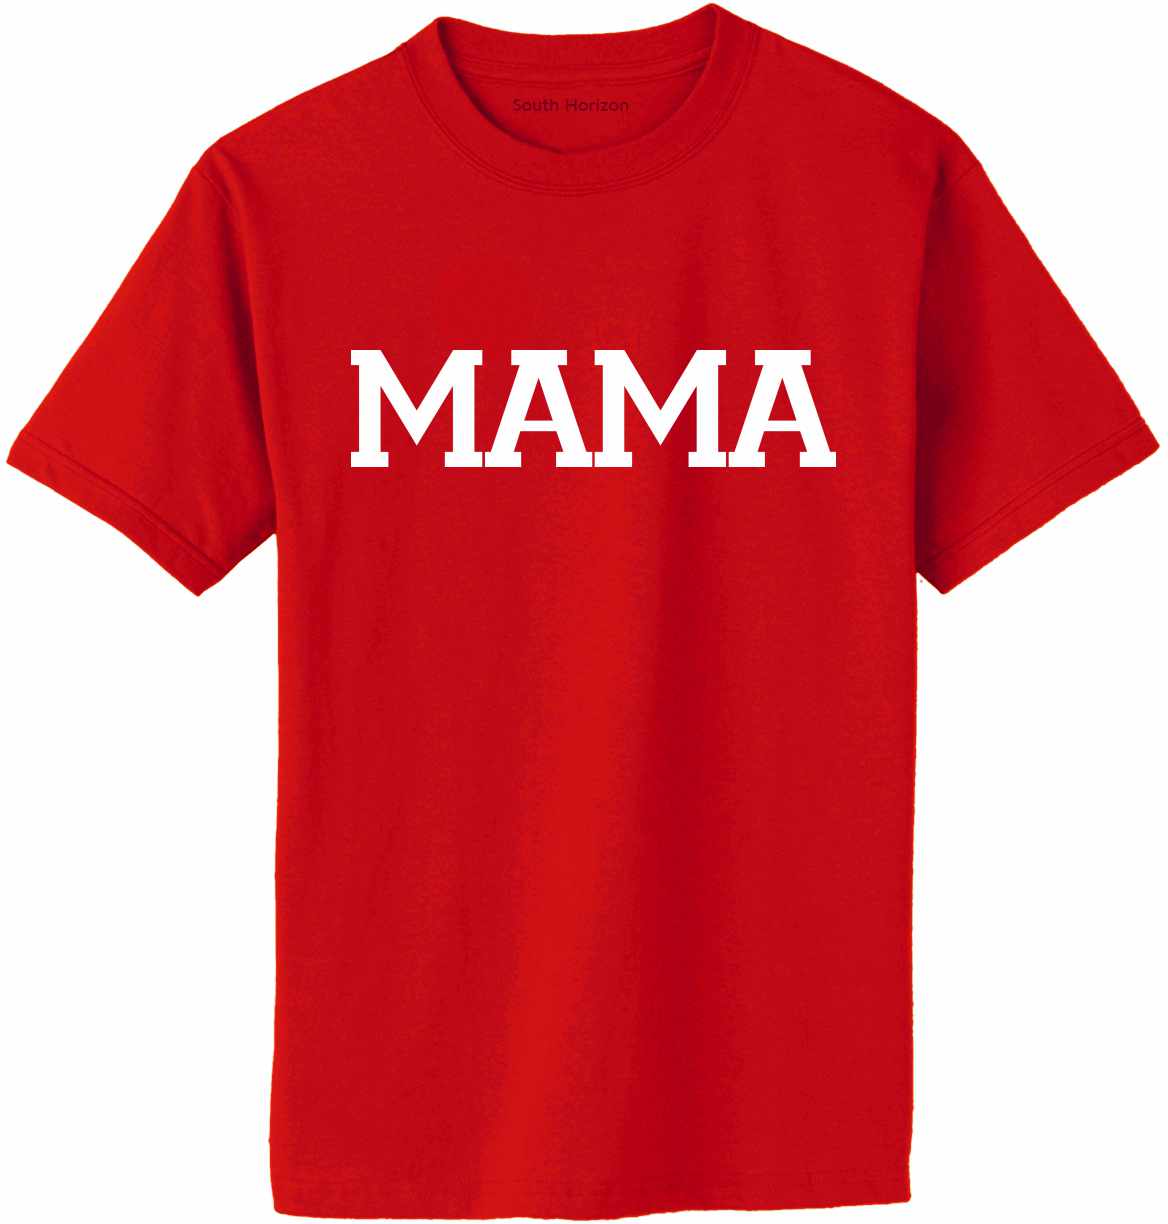 MAMA Adult T-Shirt